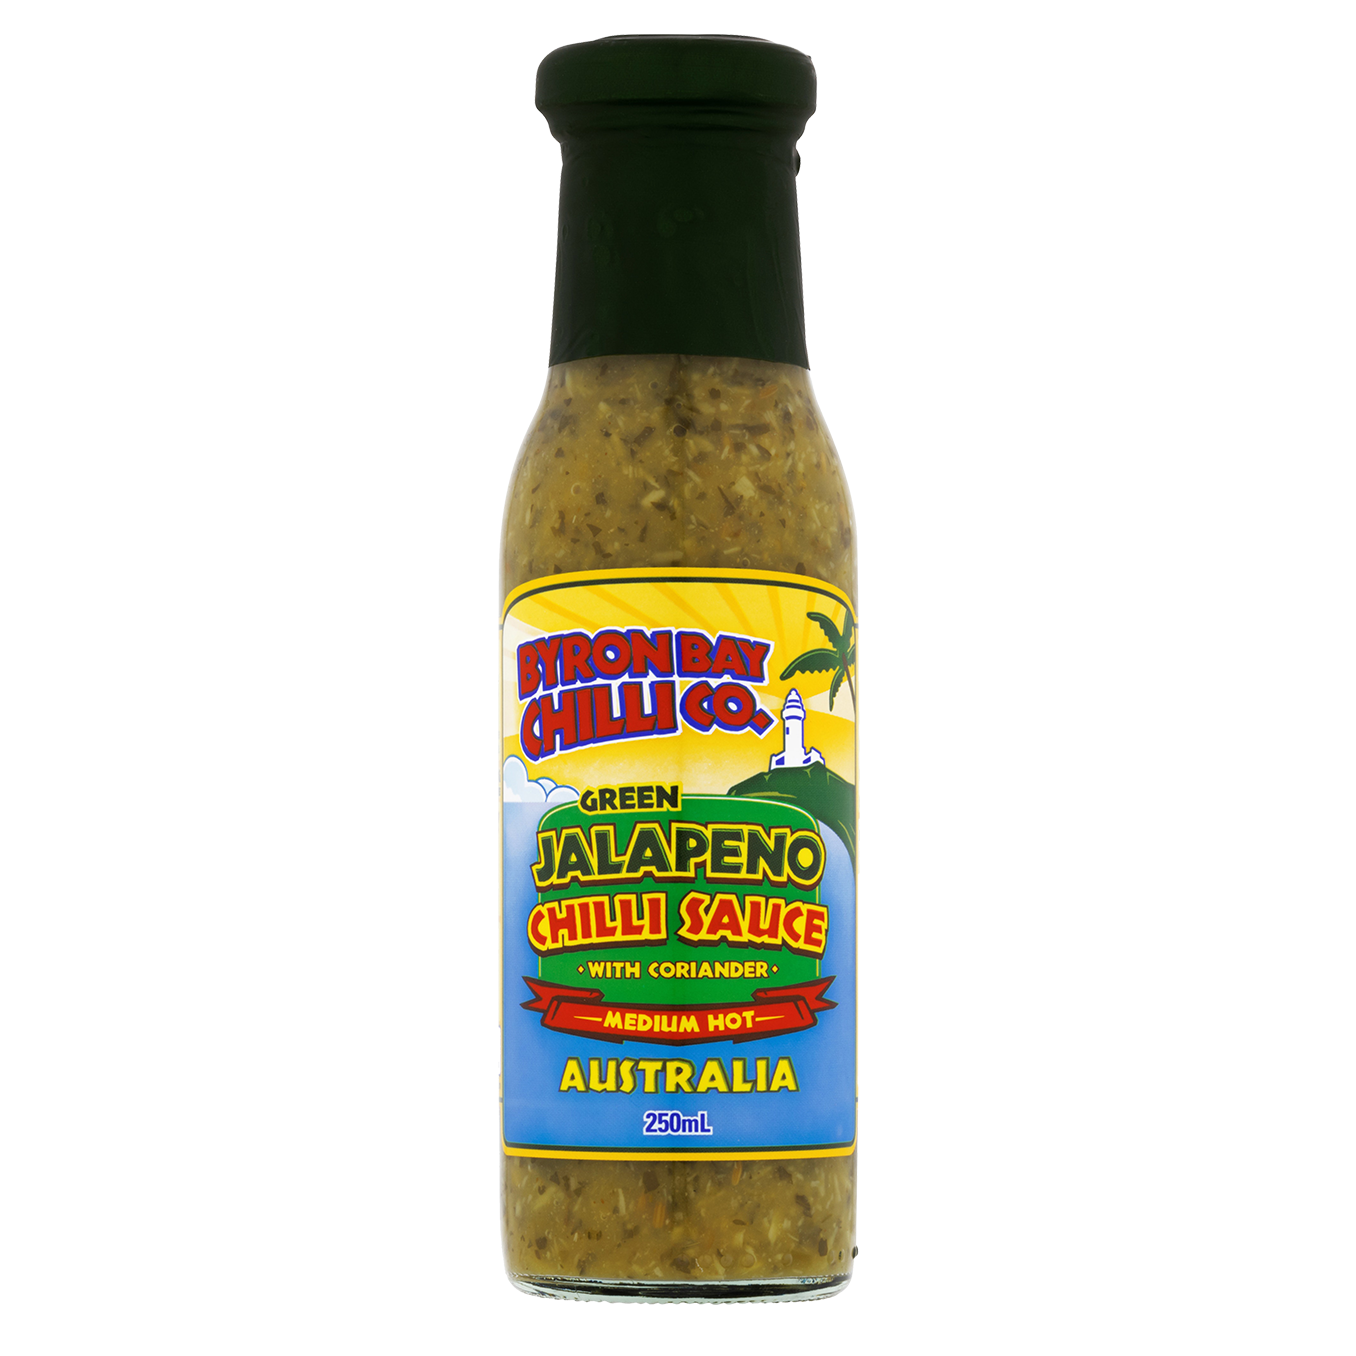 Green Jalapeno Chilli Sauce With Coriander (6 x 250ml)